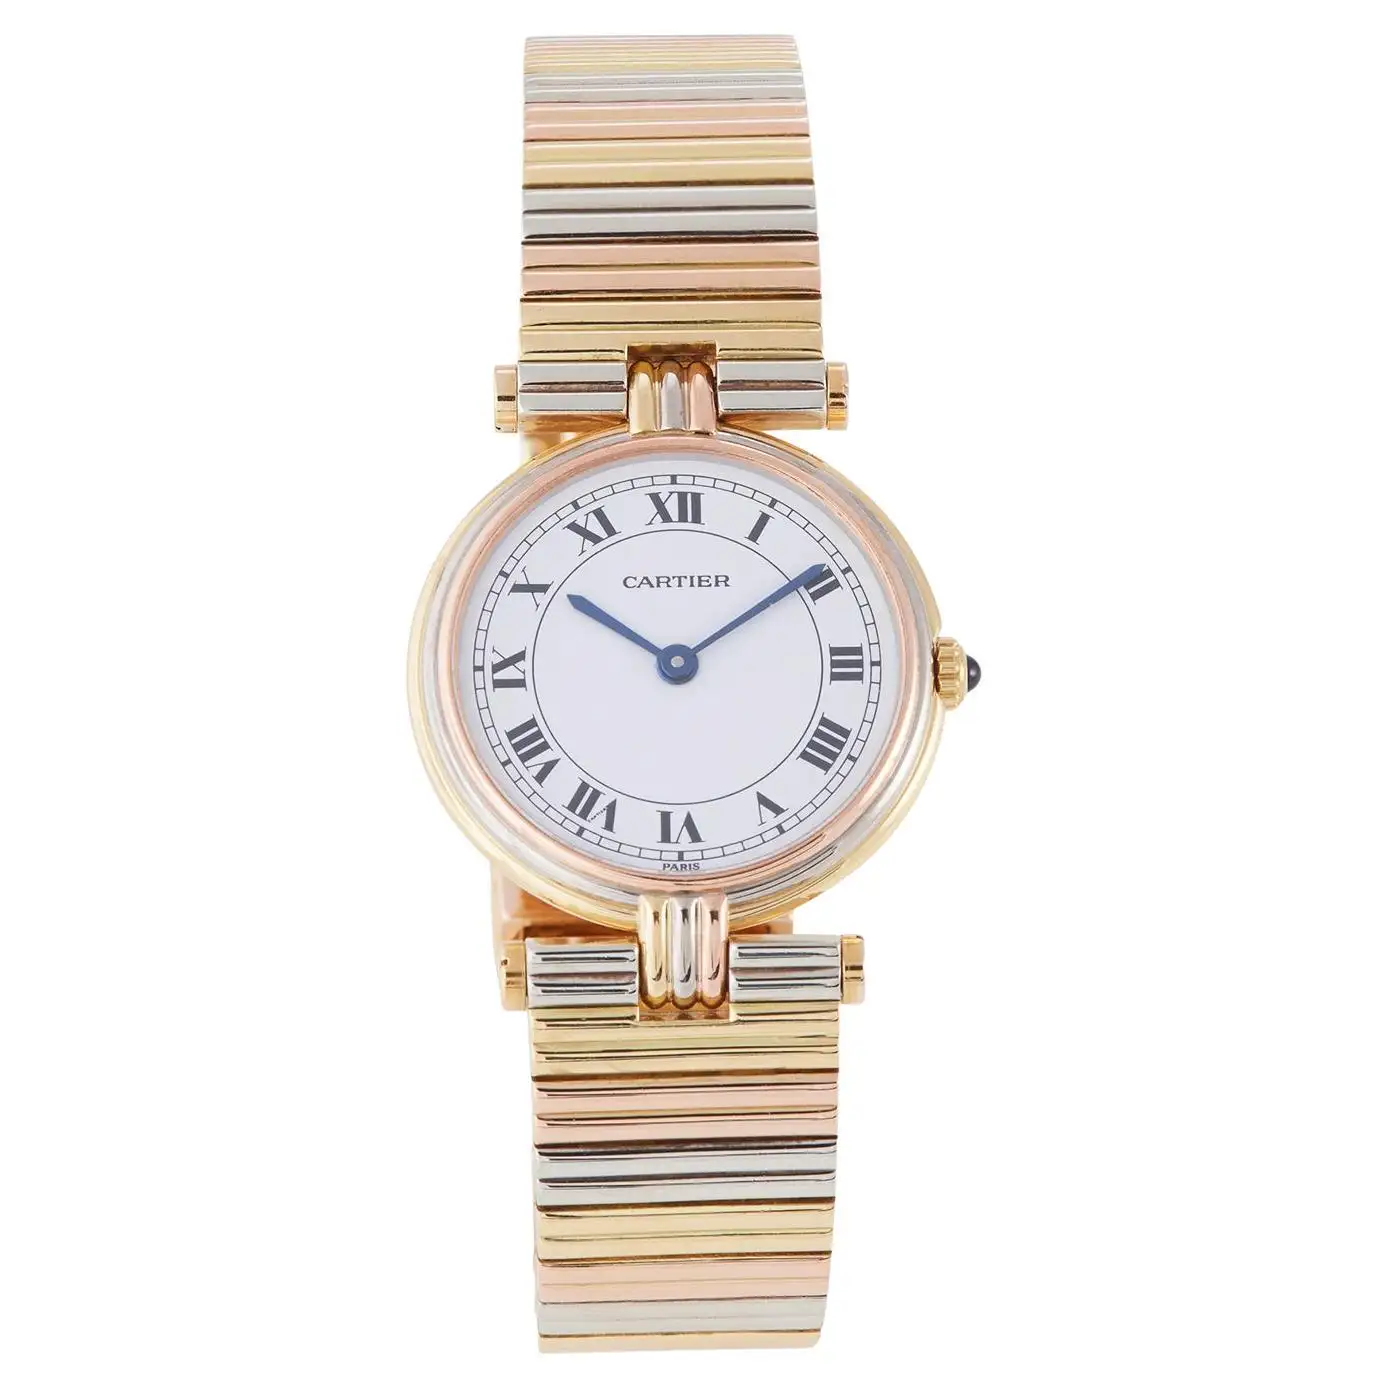 Cartier Vendome Trinity 8100 Tri-Colour Gold Watch